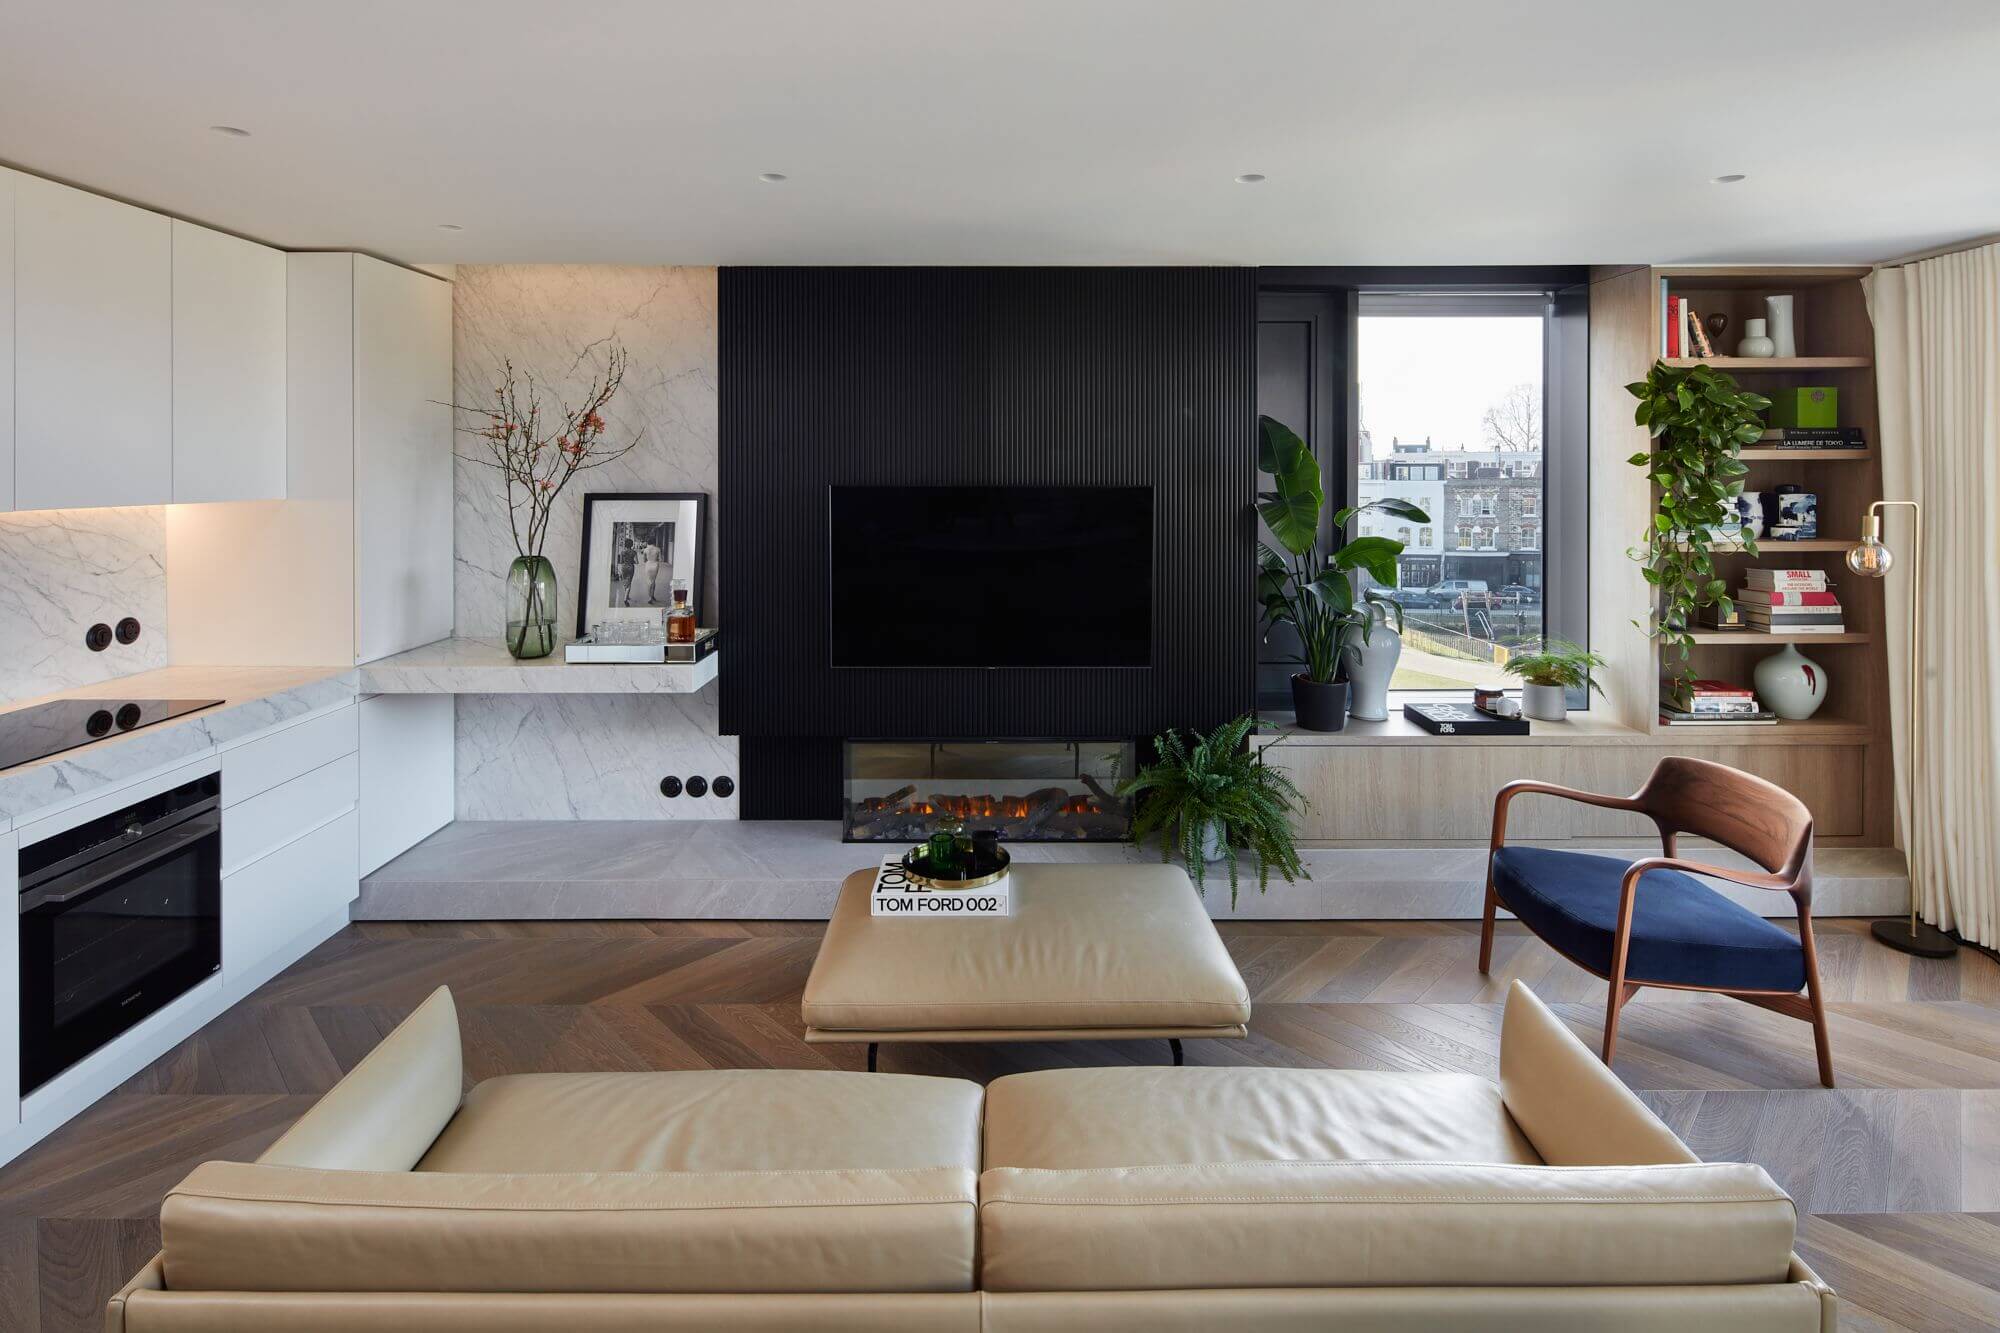 Notting Hill Faraday Road apartment renovation living room